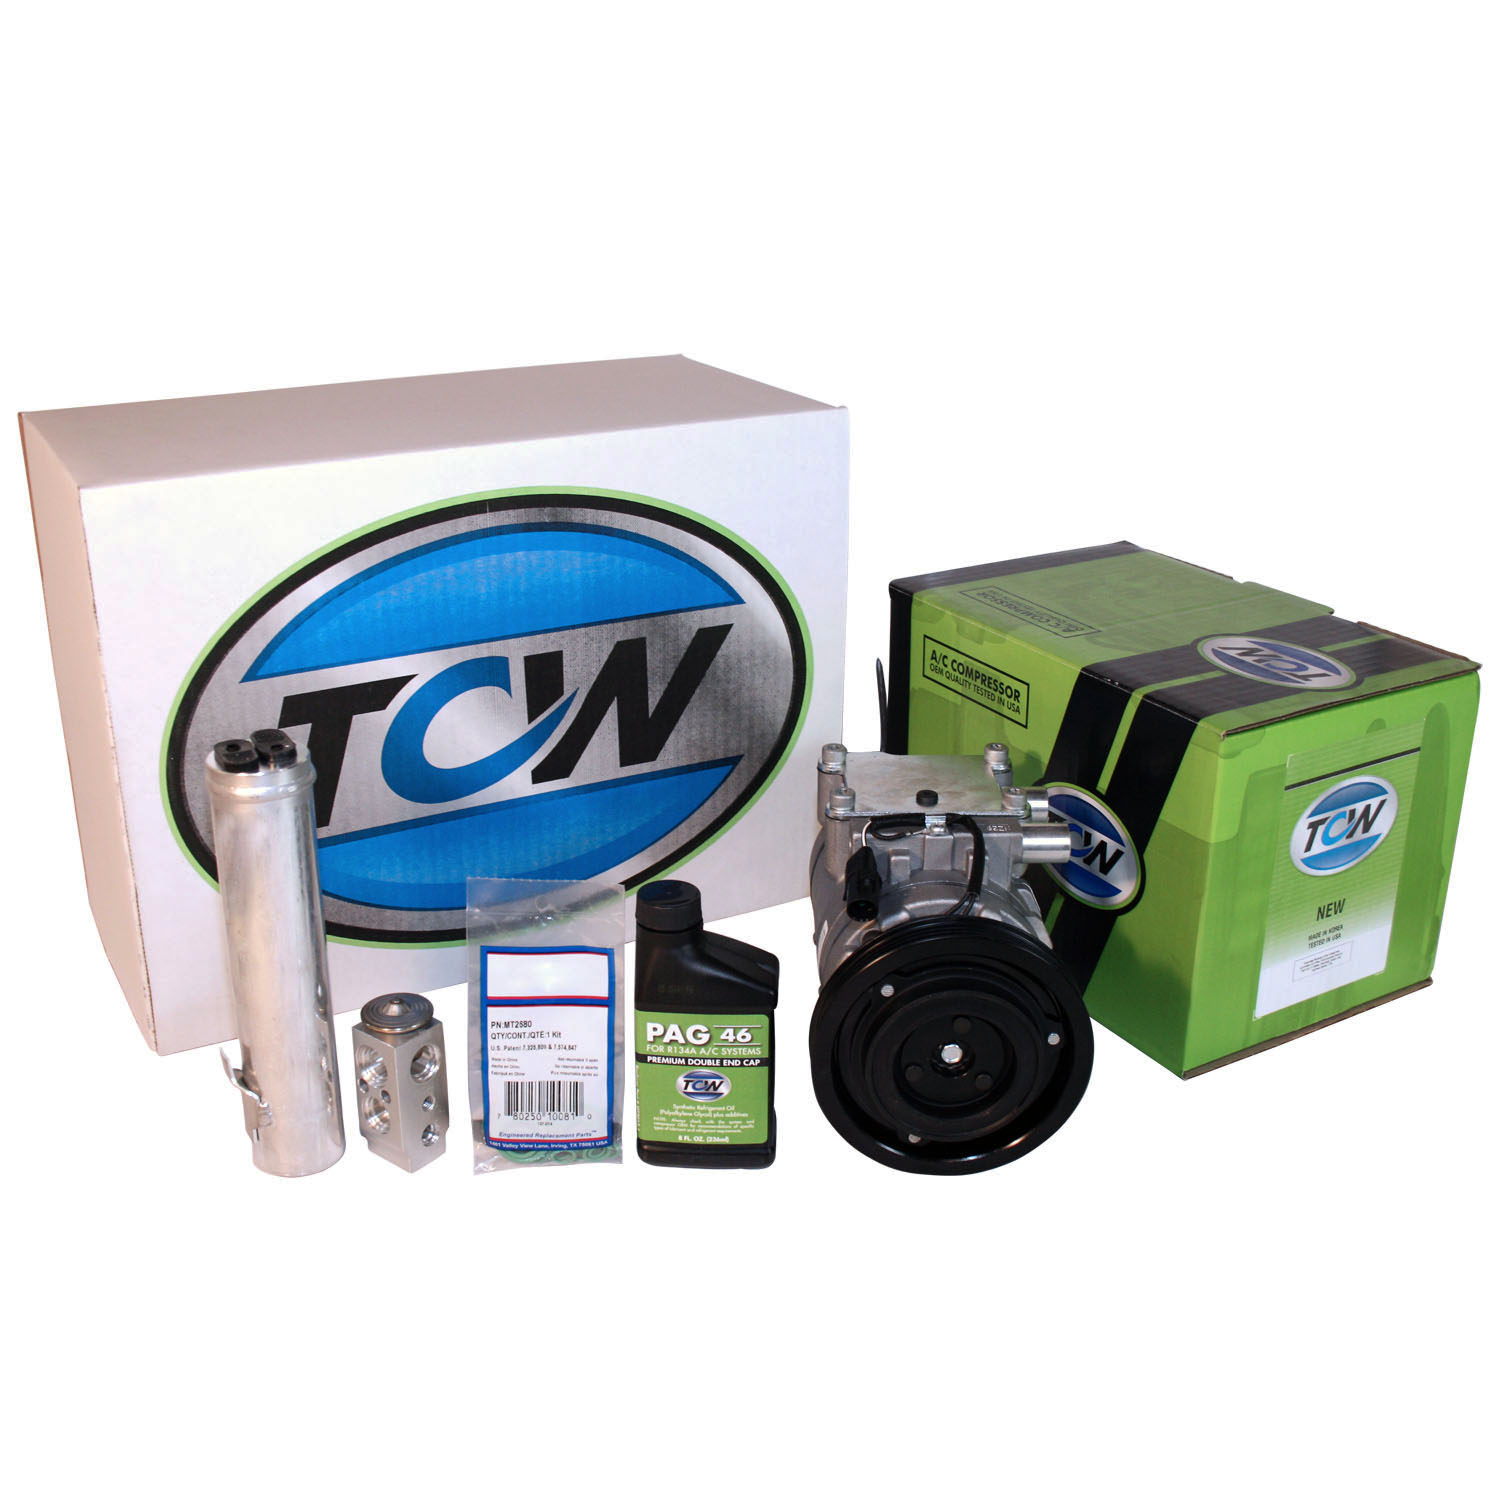 TCW Vehicle A/C Kit K1000459N New Product Image field_60b6a13a6e67c